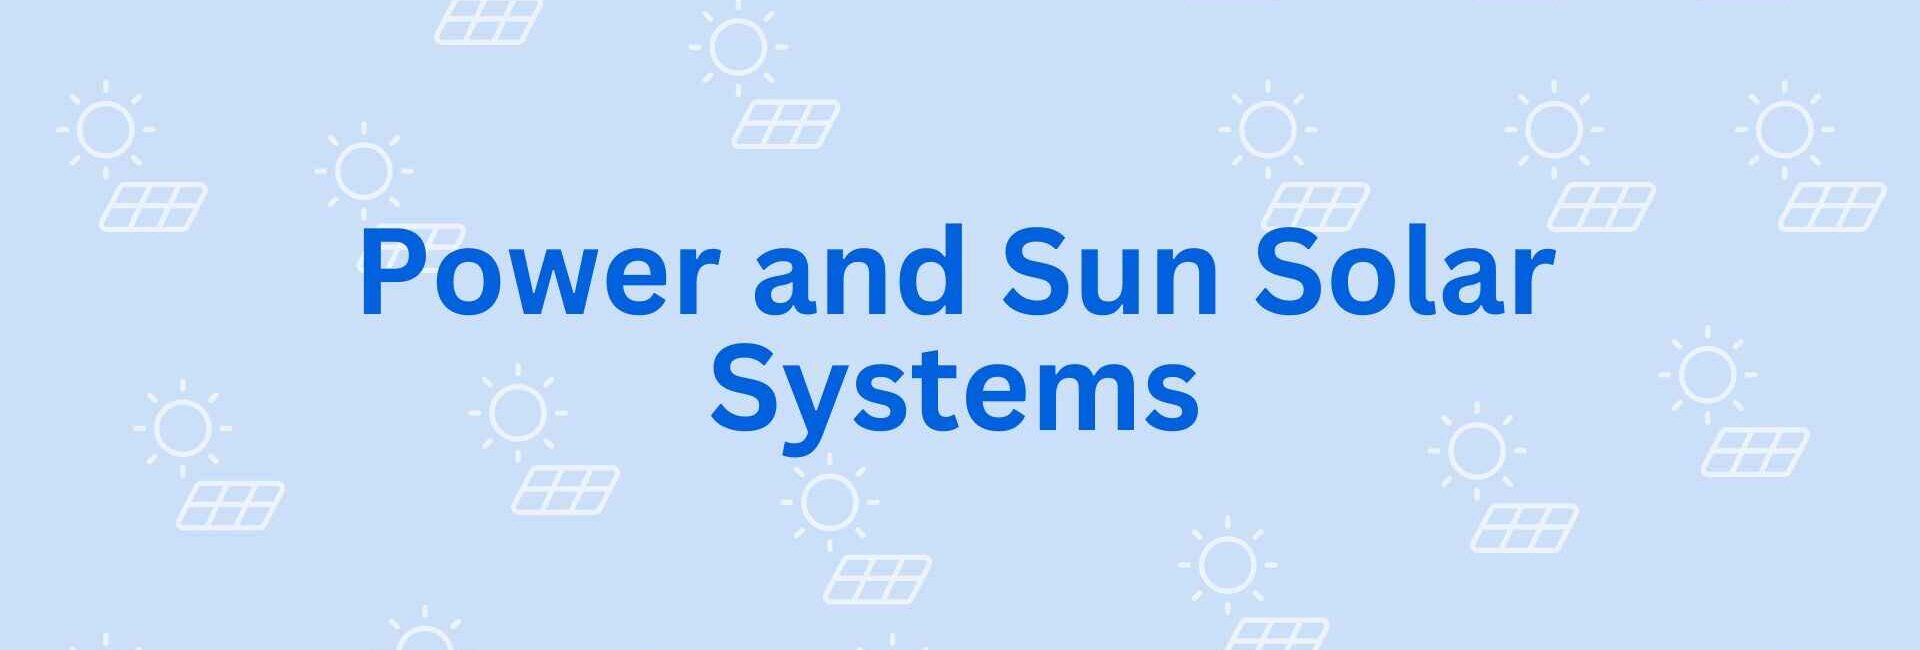 Power and Sun Solar Systems - Solar System Dealer in Noida